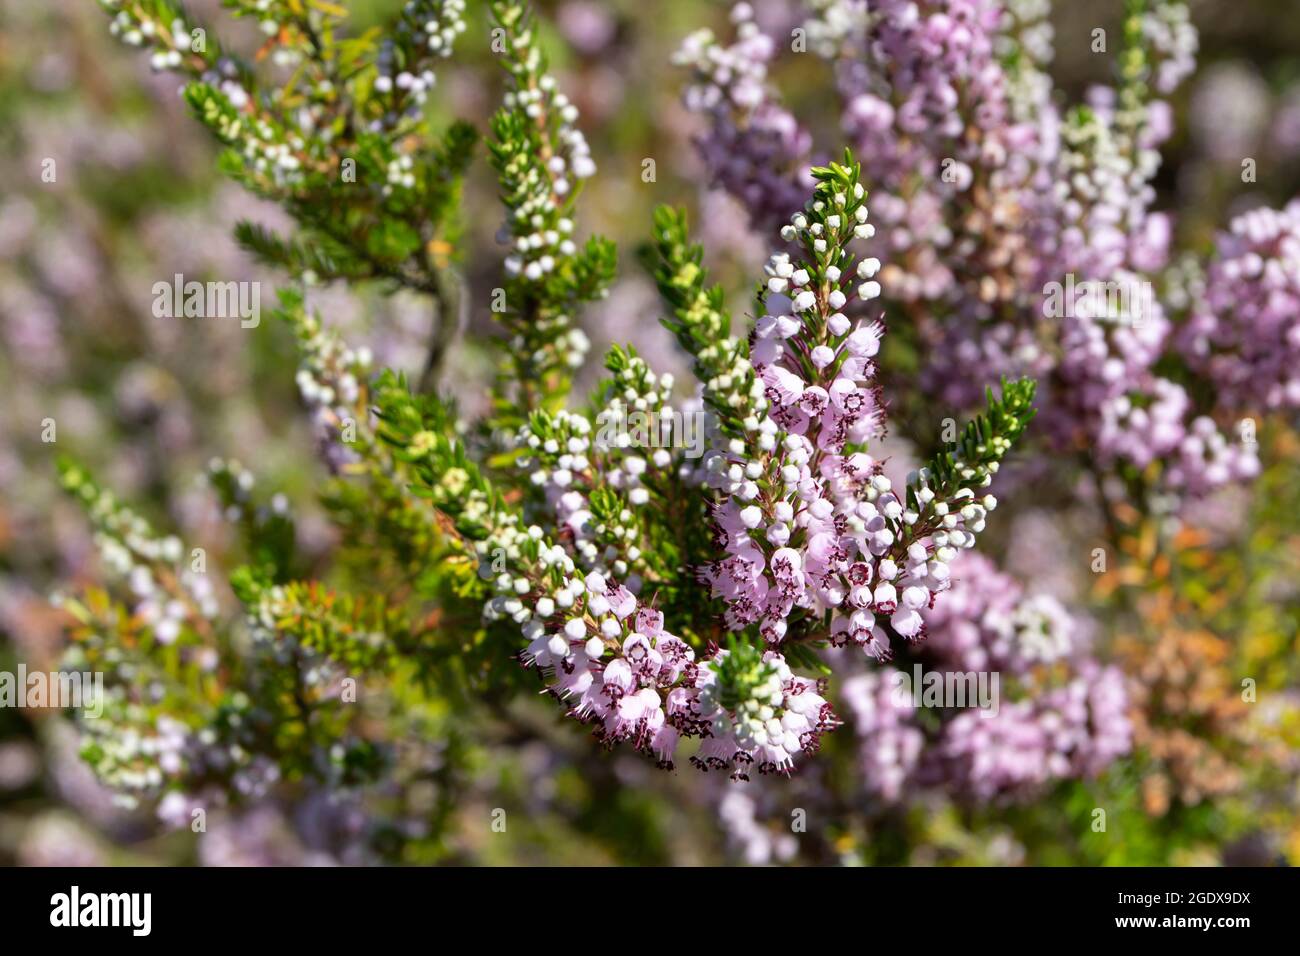 Cornish heath pink flowers. Erica vagans or wandering heath plants. Stock Photo